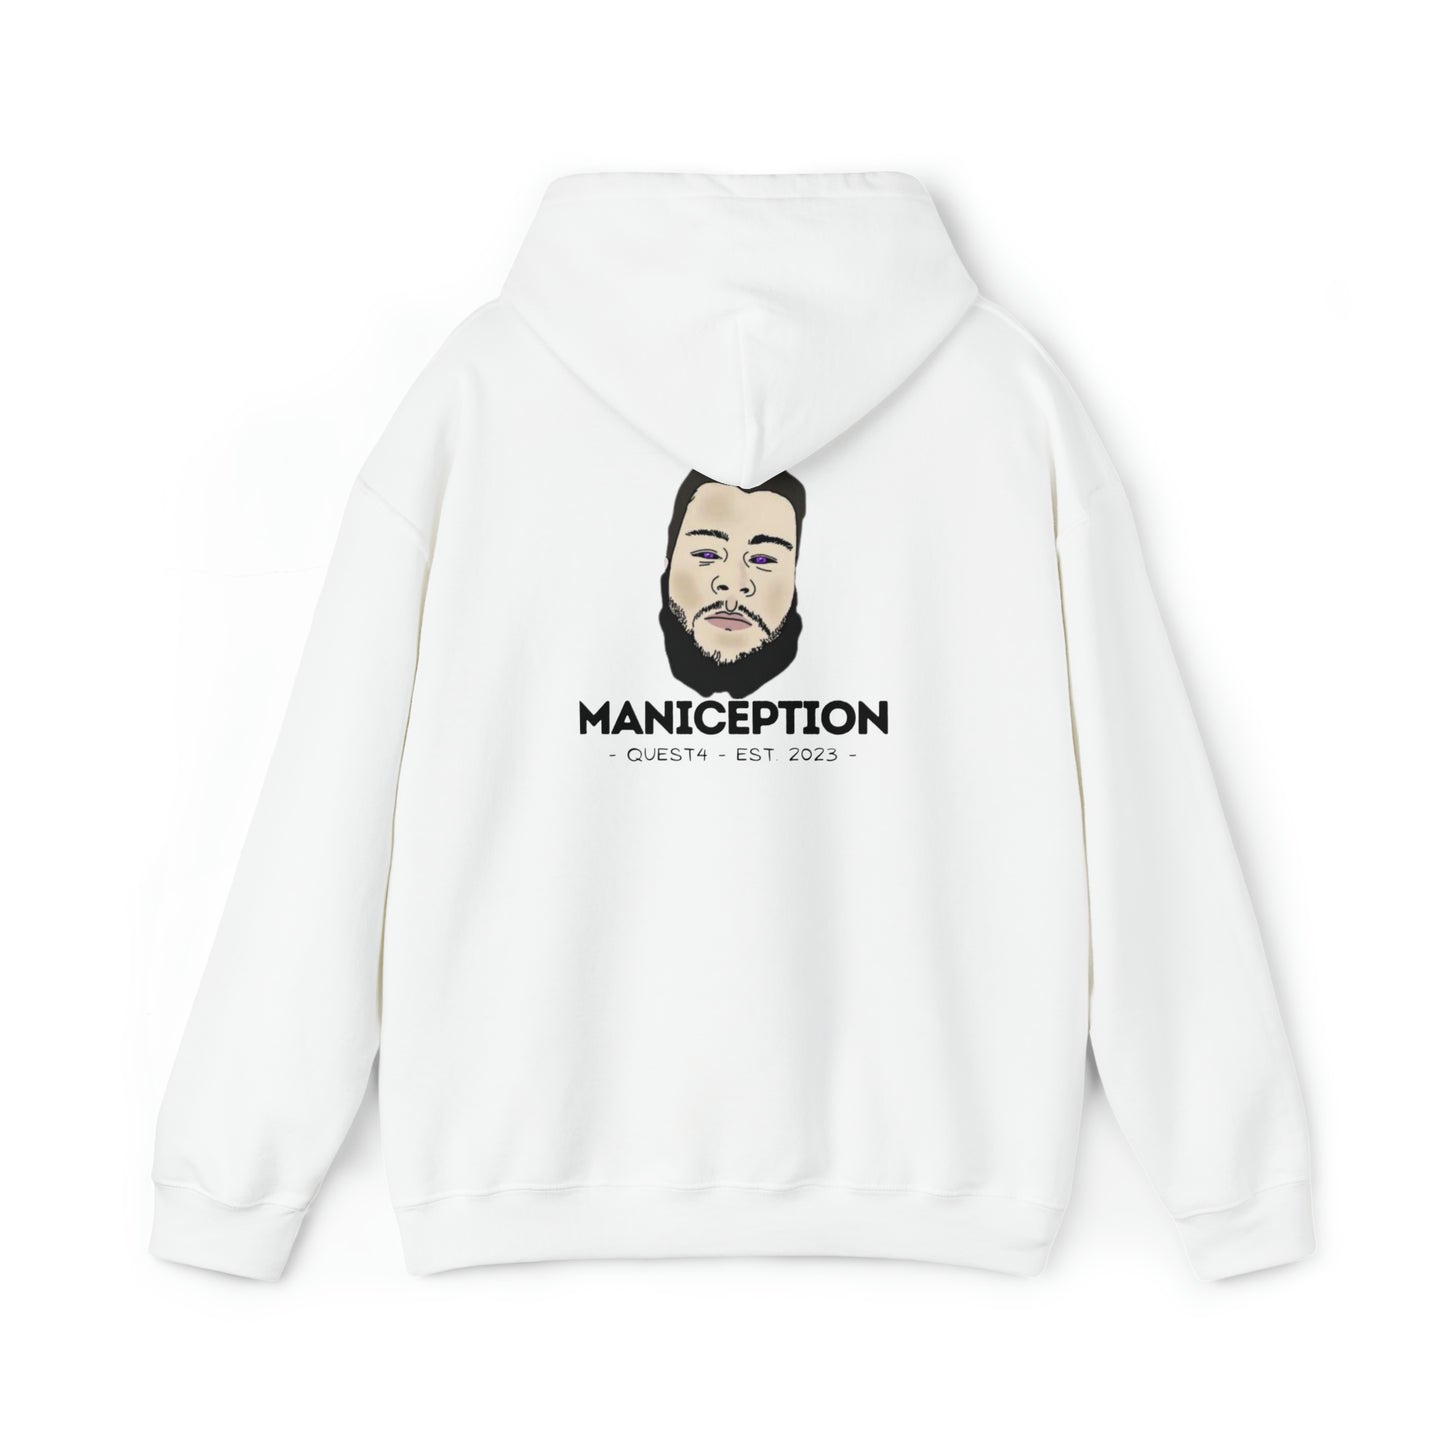 MANICEPTION Unisex Hooded Sweatshirt